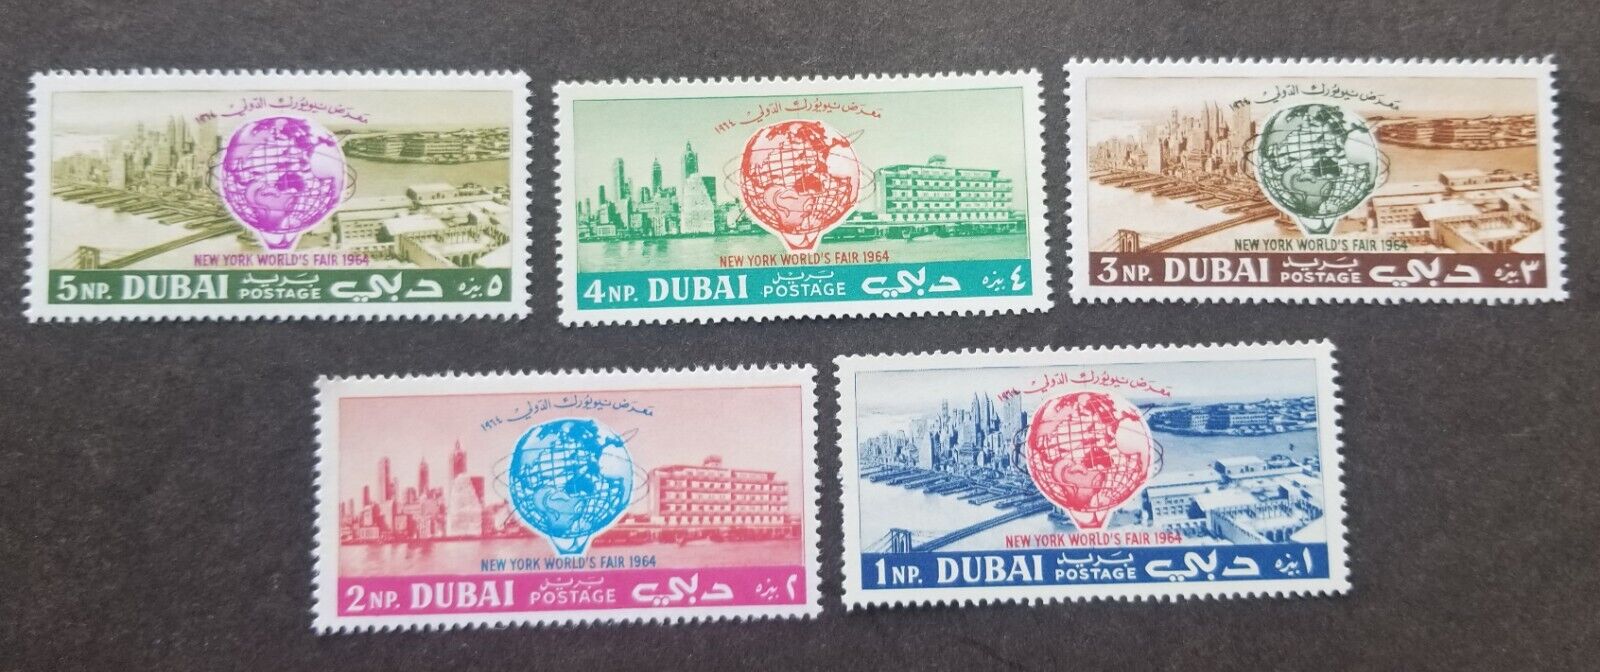 *FREE SHIP Dubai World's Fair USA New York 1964 City Bridge Town (stamp) MNH 